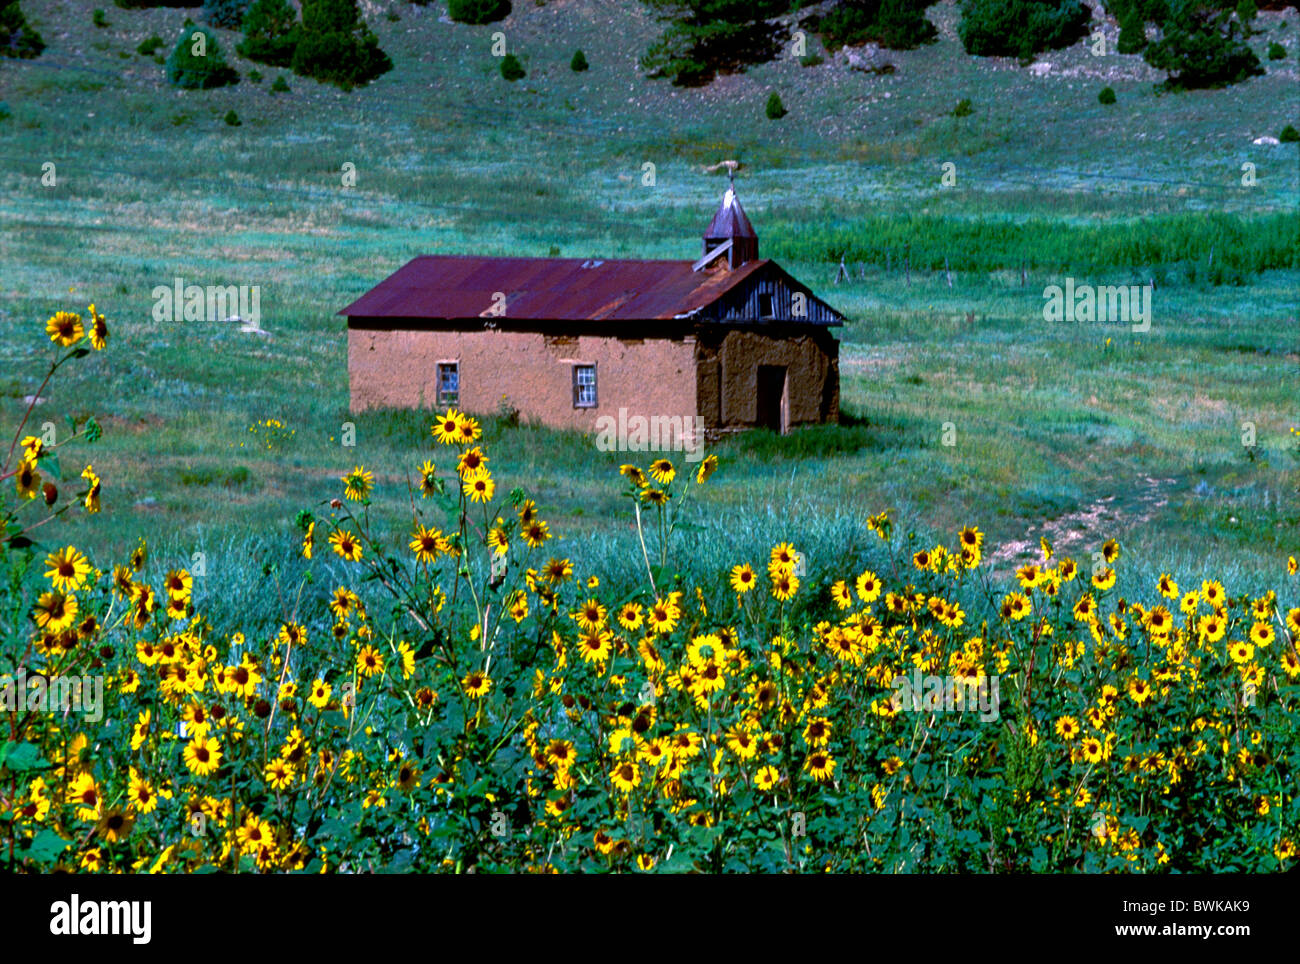 USA America North America New Mexico route 518 with Mora church sunflowers scenery Stock Photo